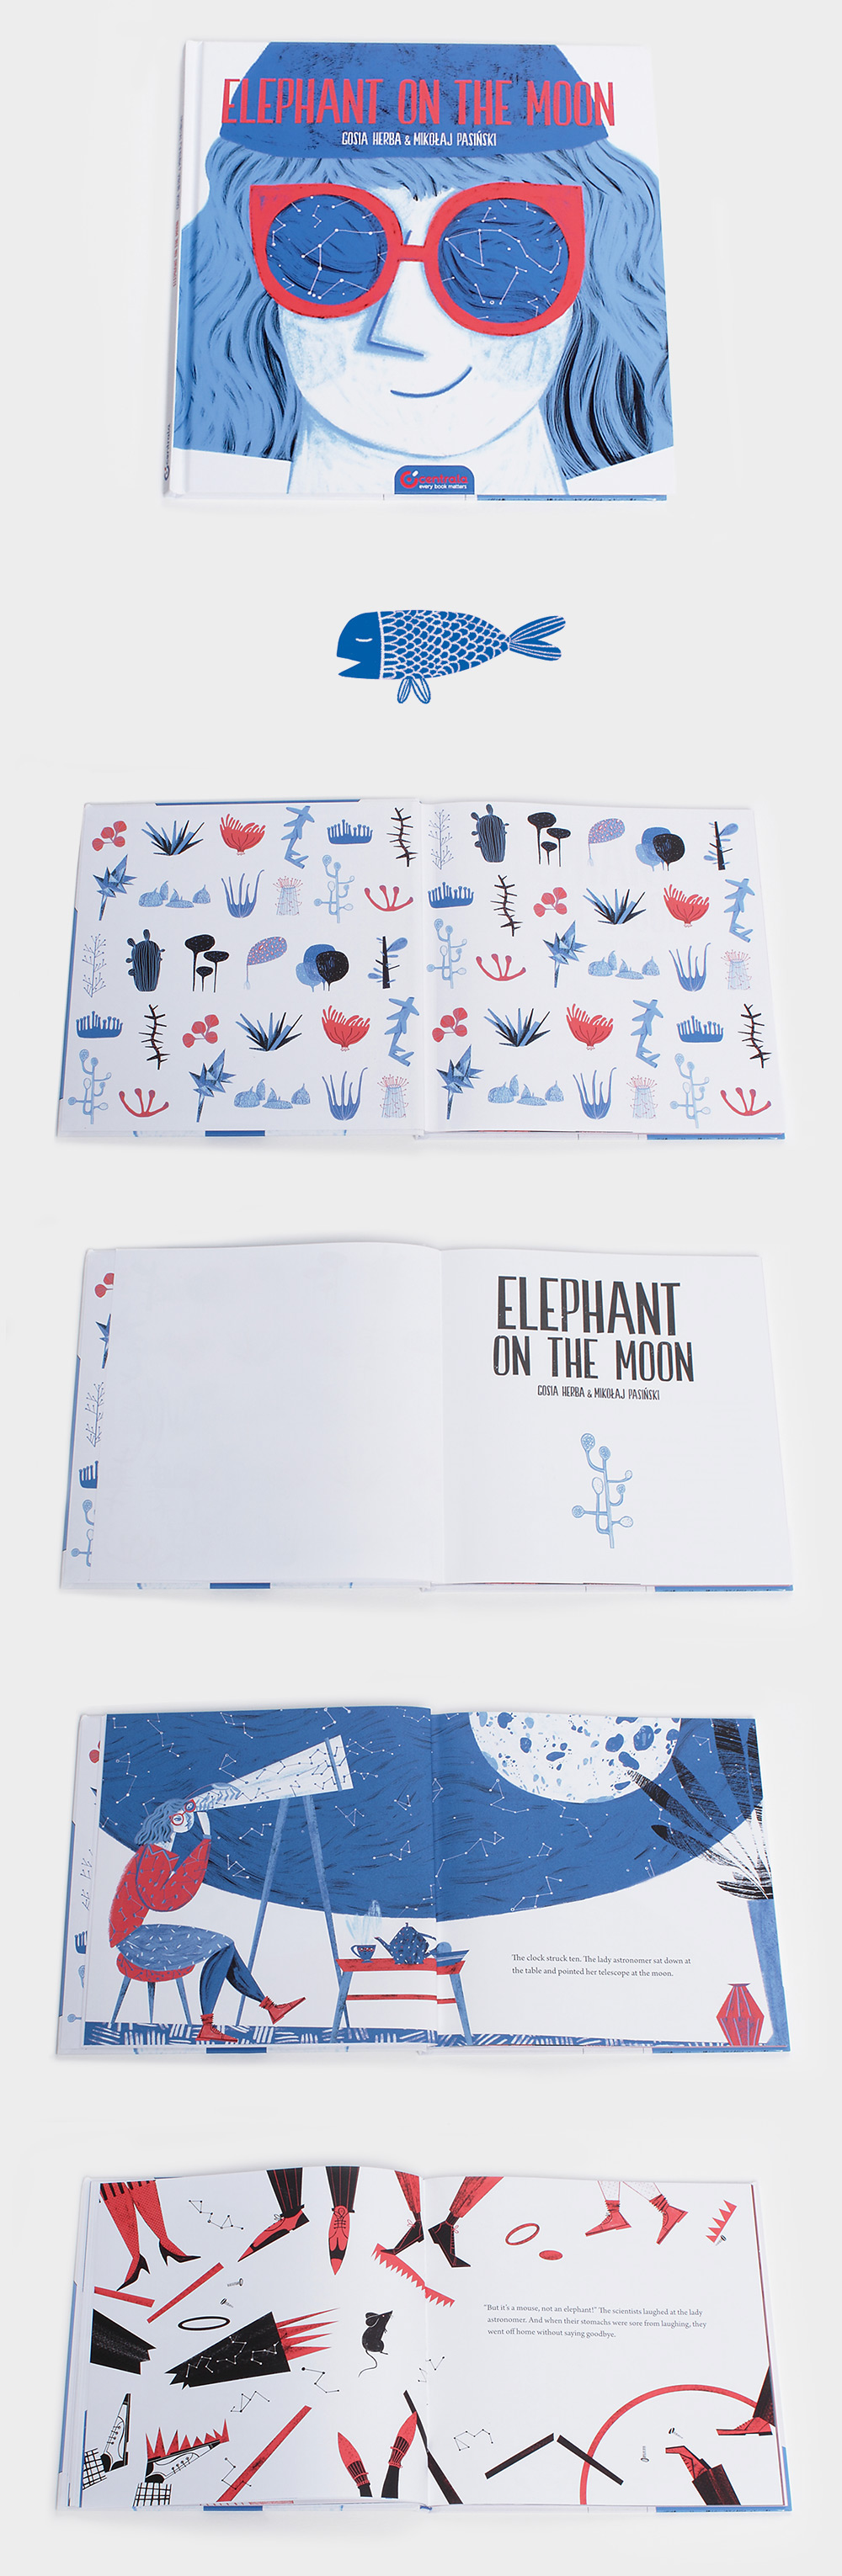 picturebook book design childrensbook editorial illustratedbook moon elephant astronomer